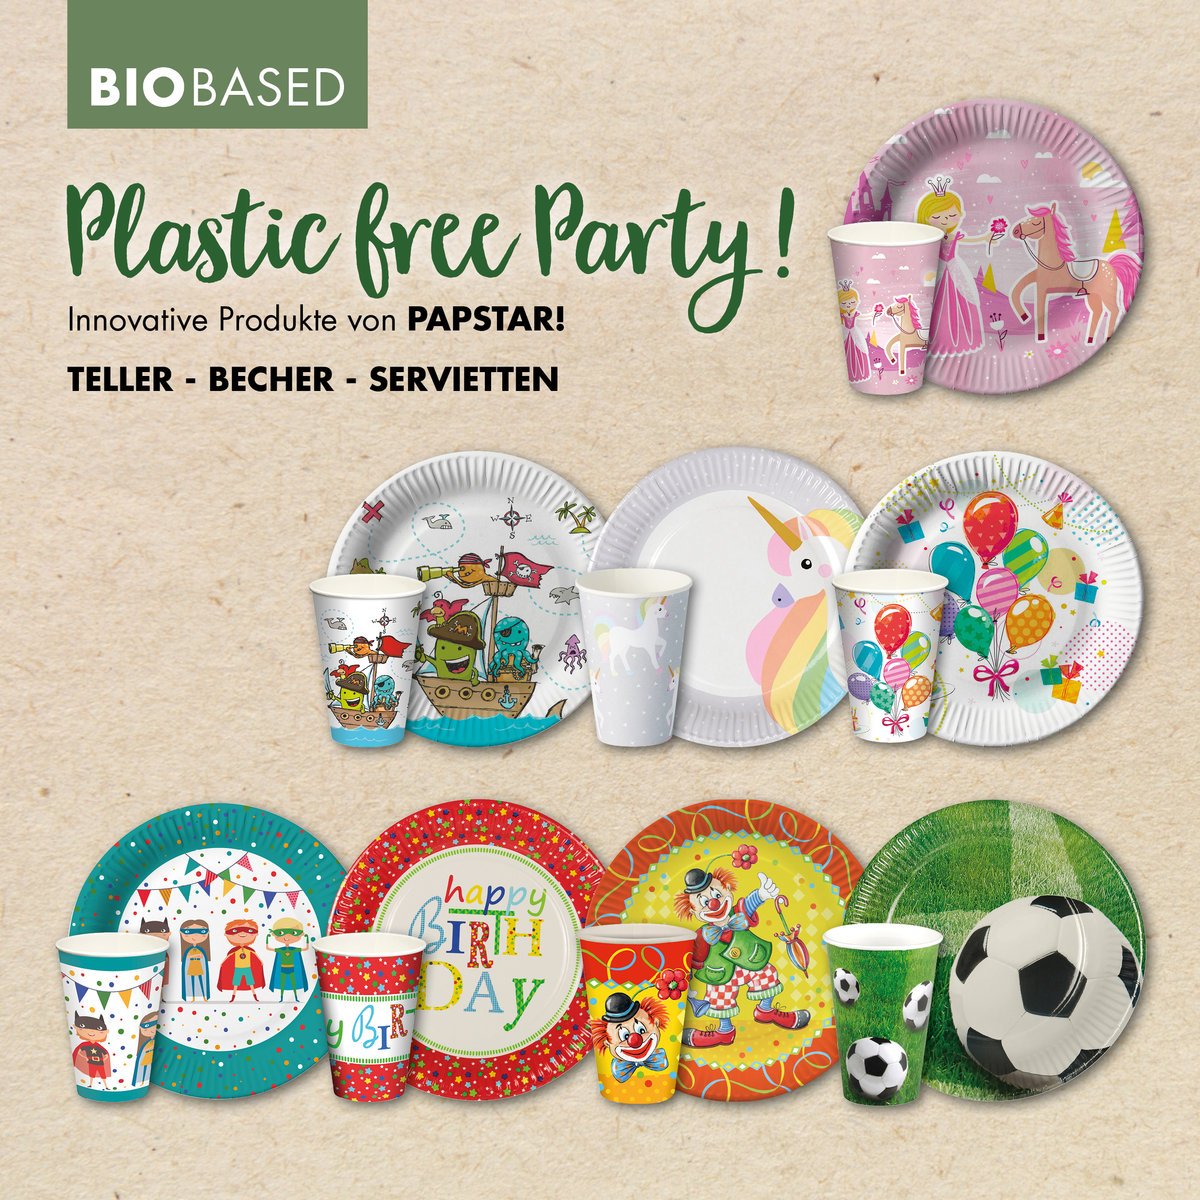 Plastic free Party